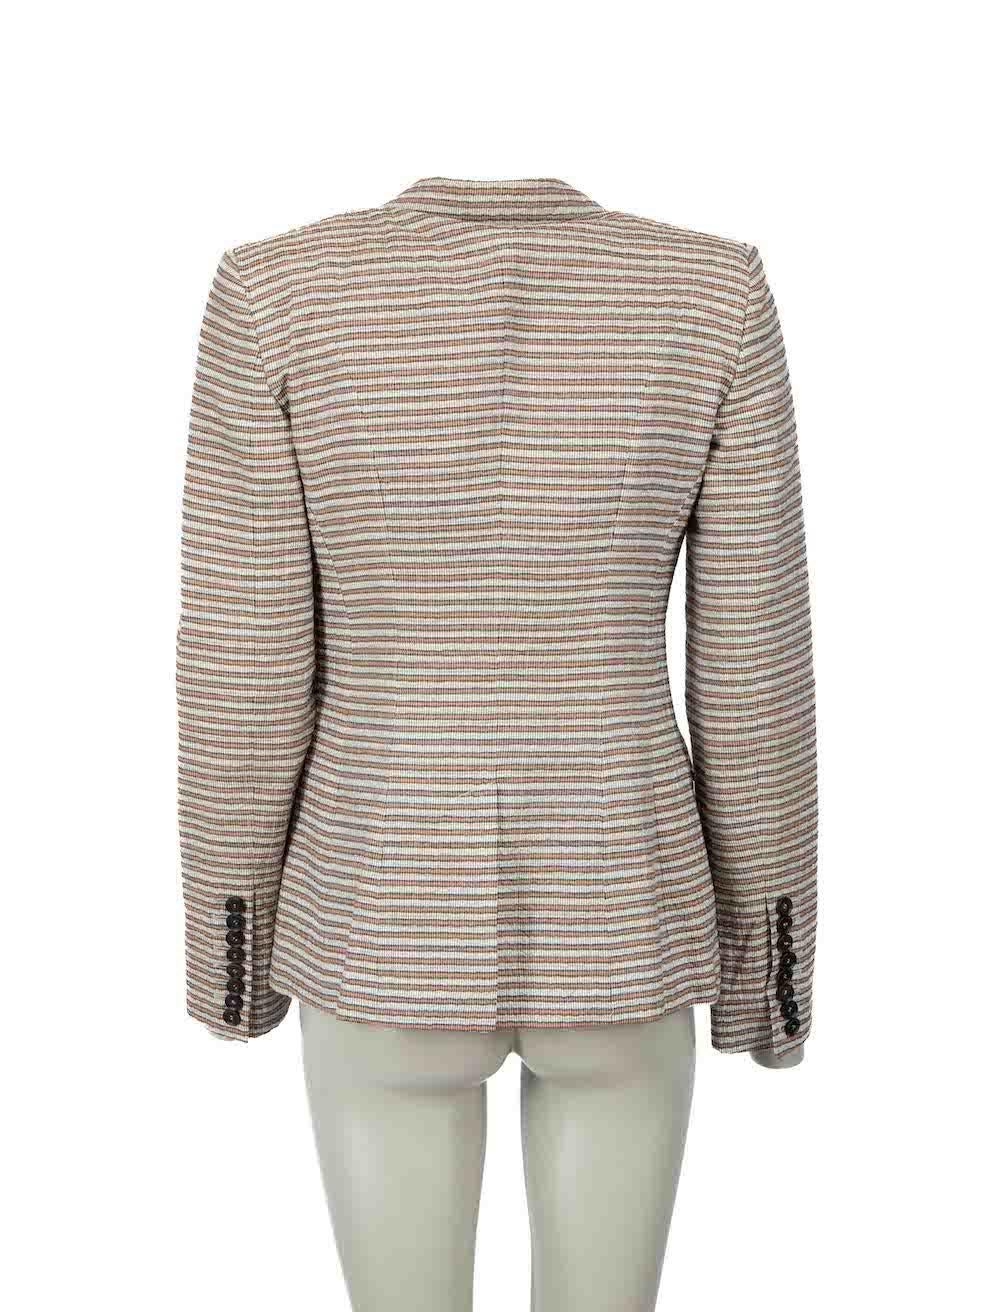 Burberry Burberry Prorsum Grey Striped Blazer Jacket Size S In New Condition In London, GB